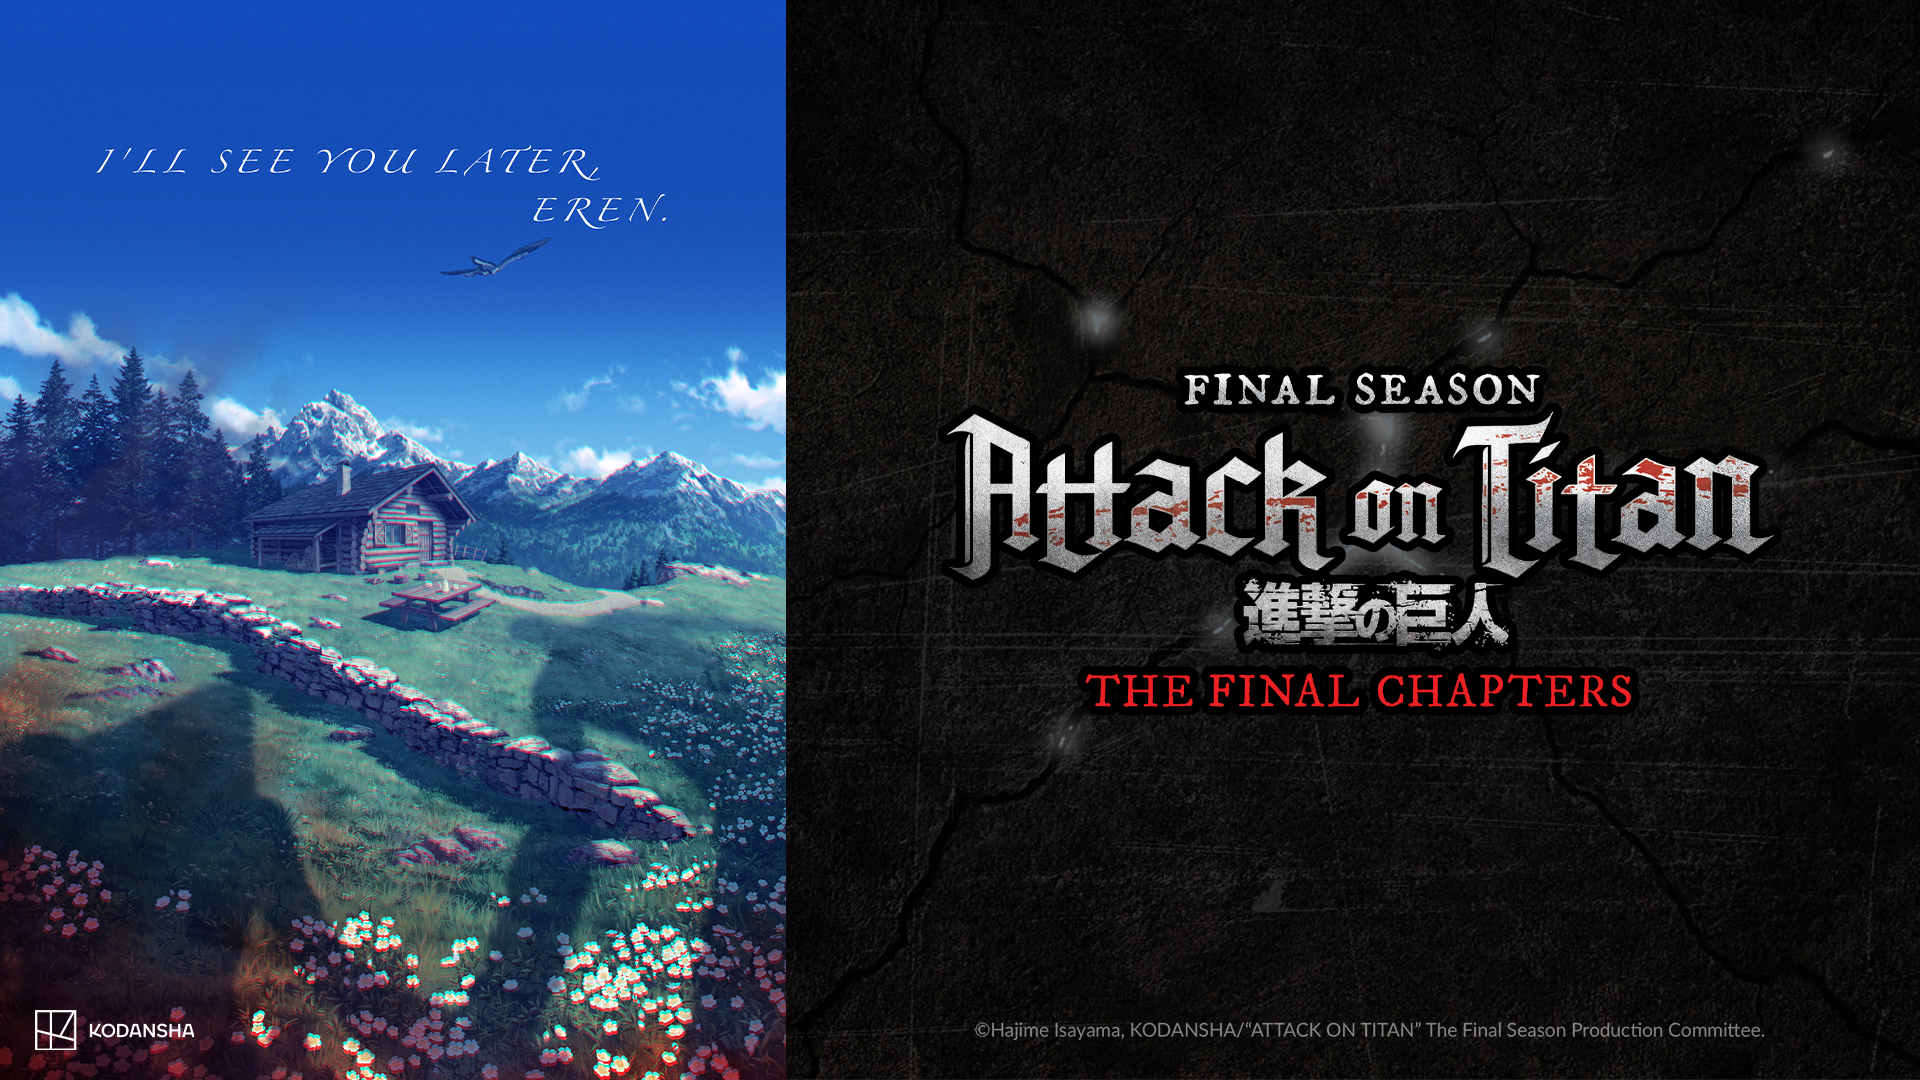 Attack on Titan The Final Season Parte 3 revela Trailer Principal